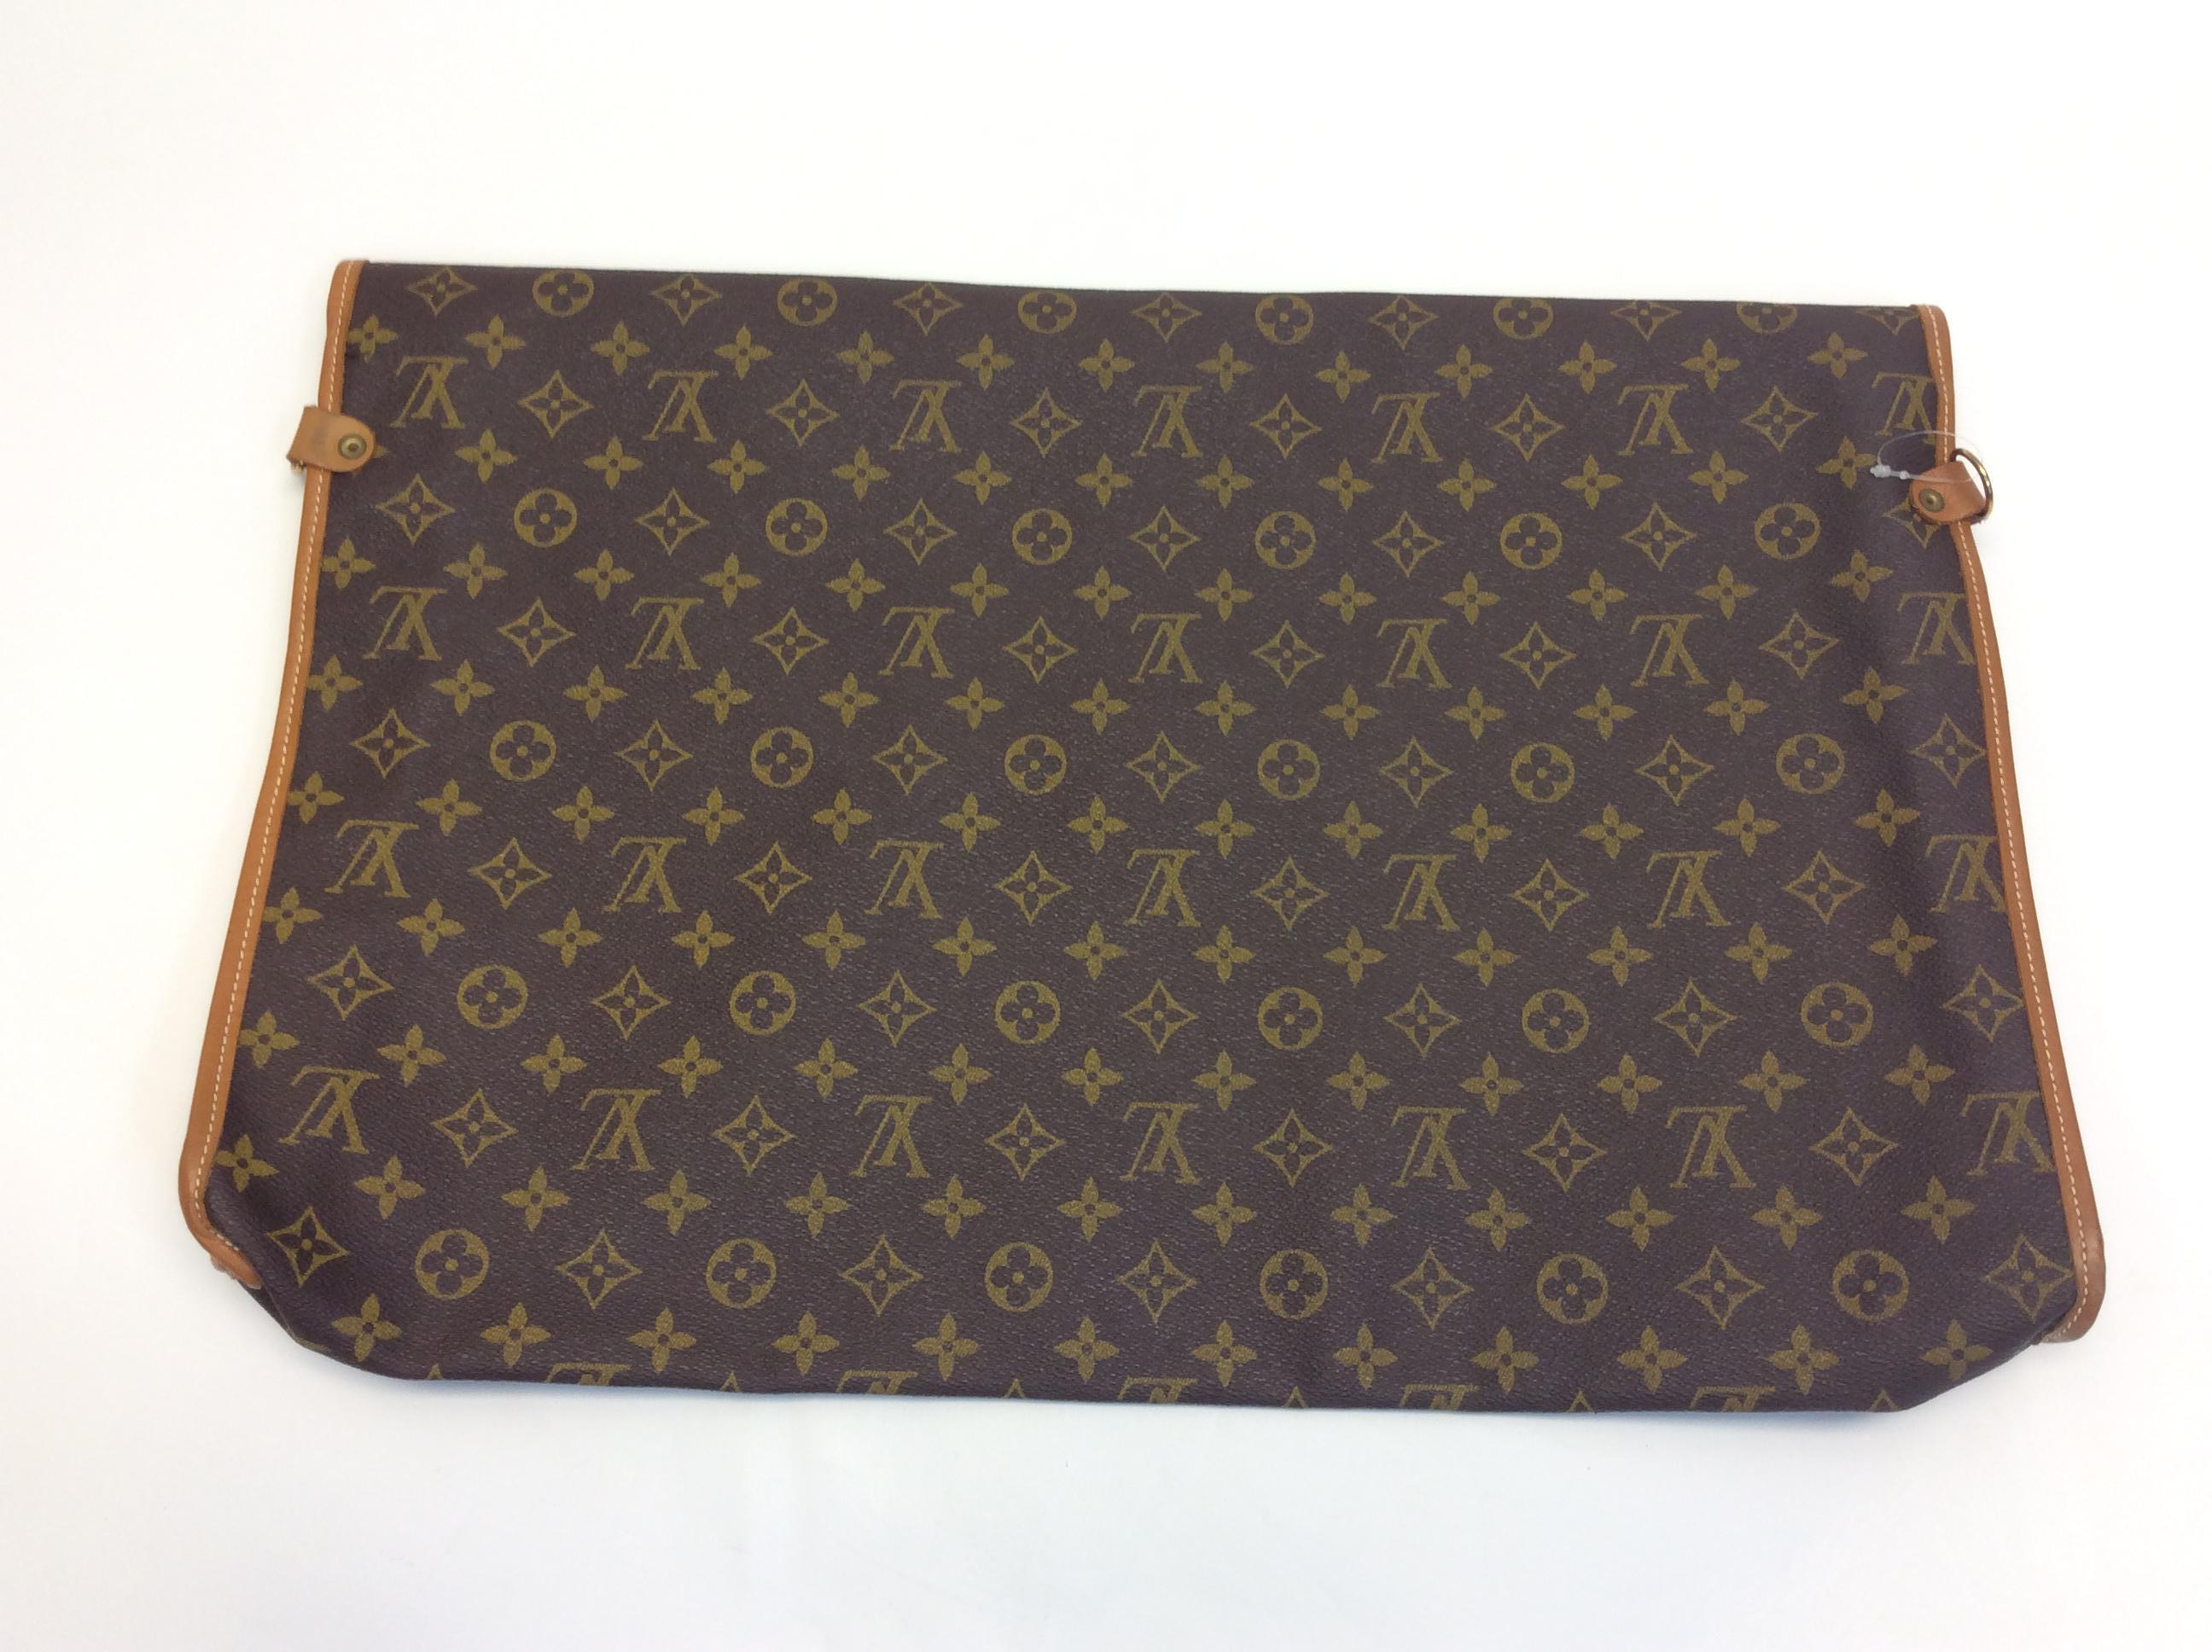 Louis Vuitton Medium Luggage Insert
$299
20.75